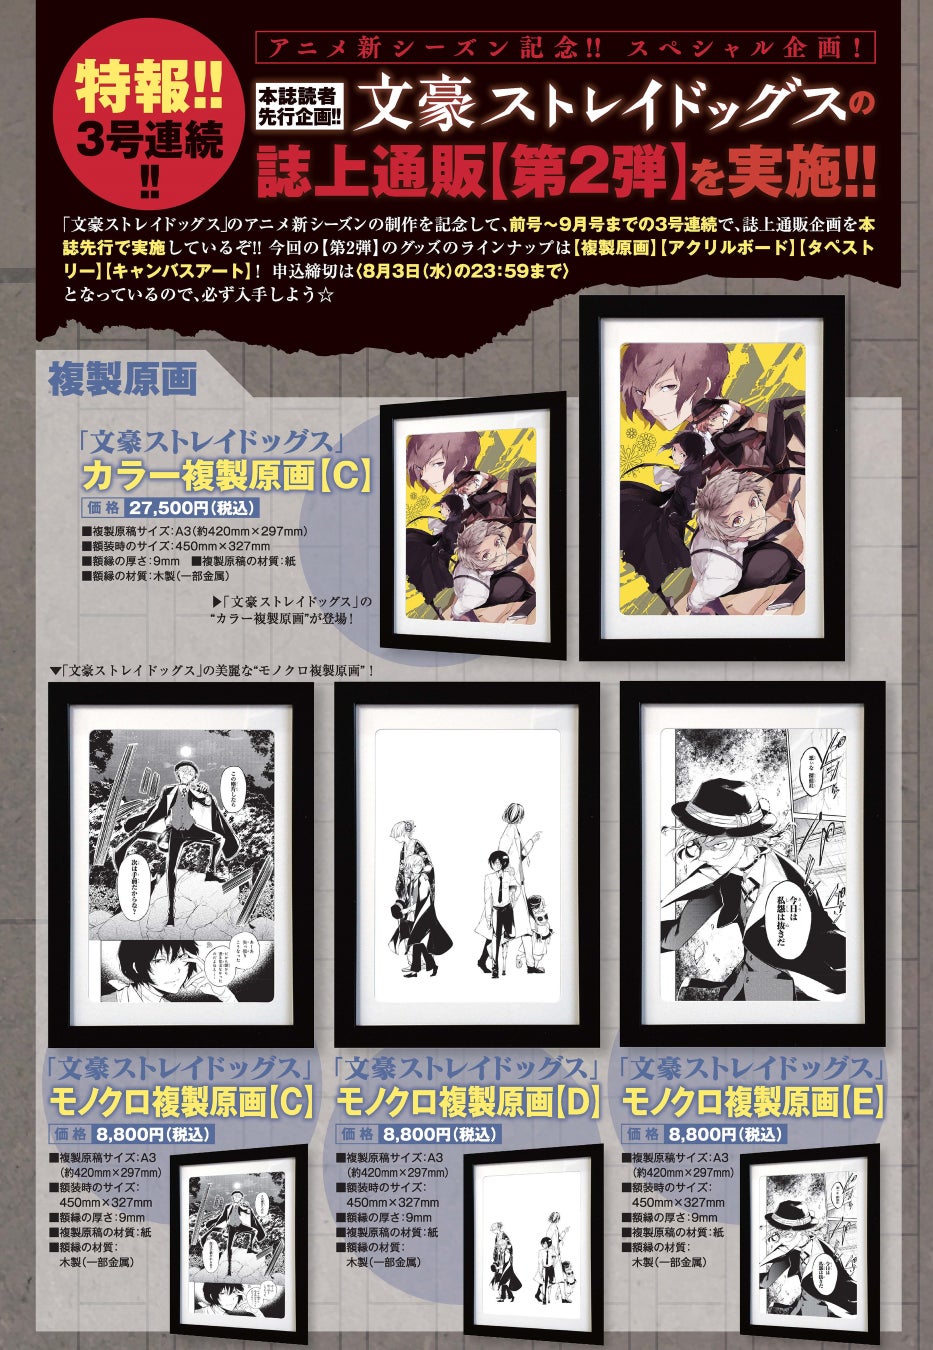 TVアニメ『呪術廻戦』× Cake.jpのコラボ　東京都立呪術高等専門学校二年生のキャラクター3名をモチーフにしたオリジナルケーキを7月4日（月）より販売開始